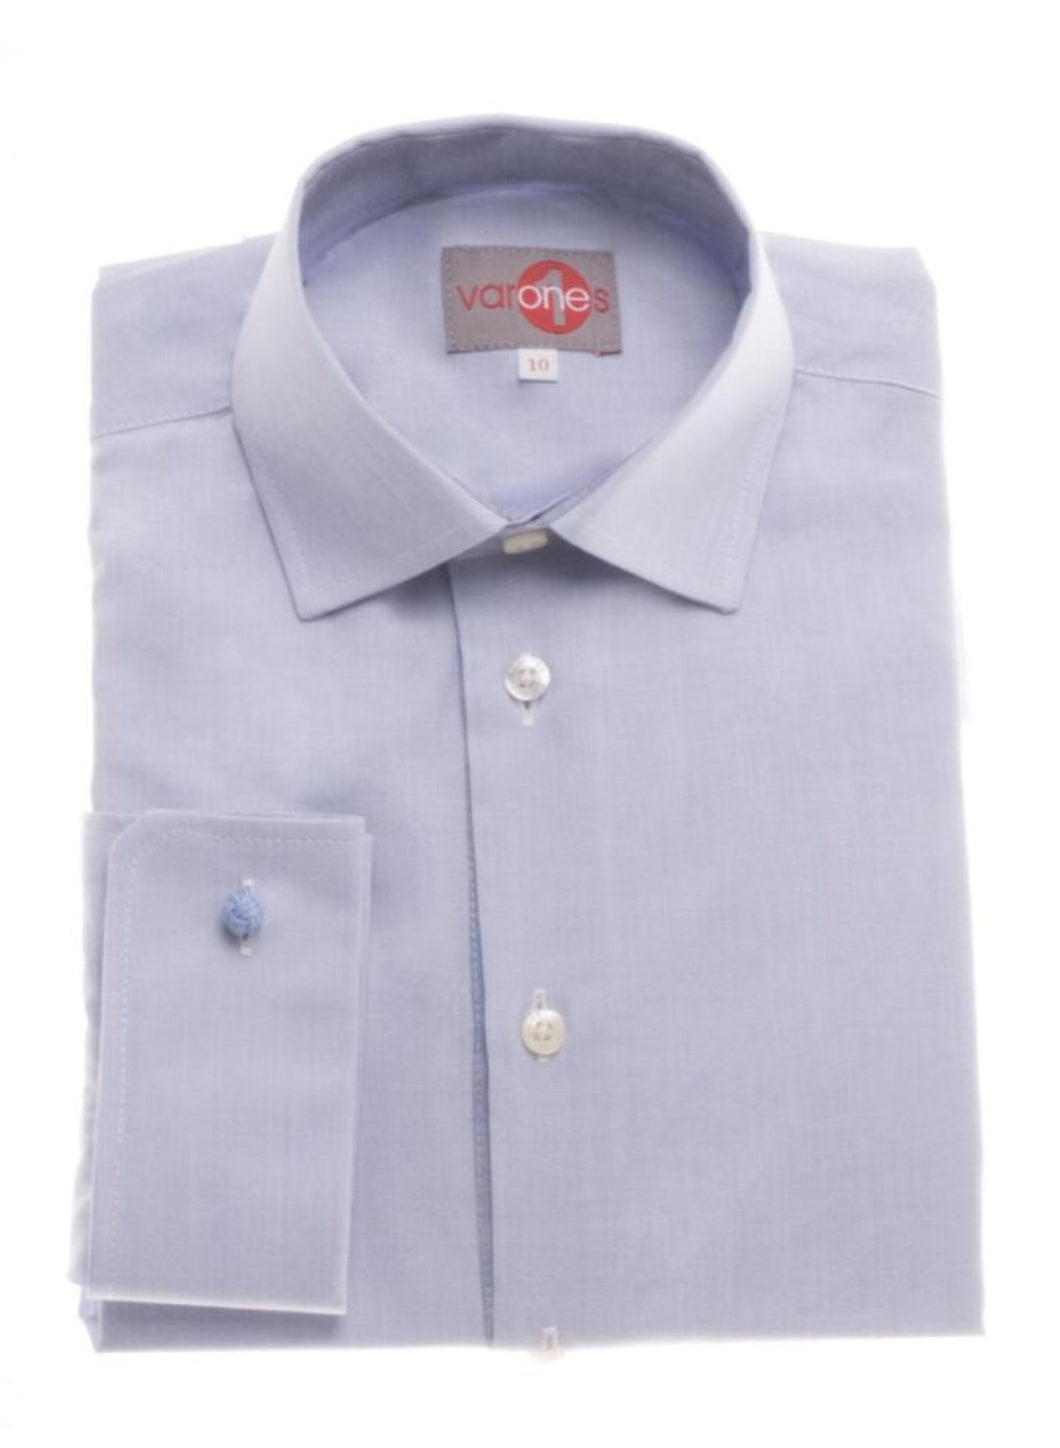 SALE One Varones Boys Blue Shirt With Grey Collar Insert:-10-06092 02